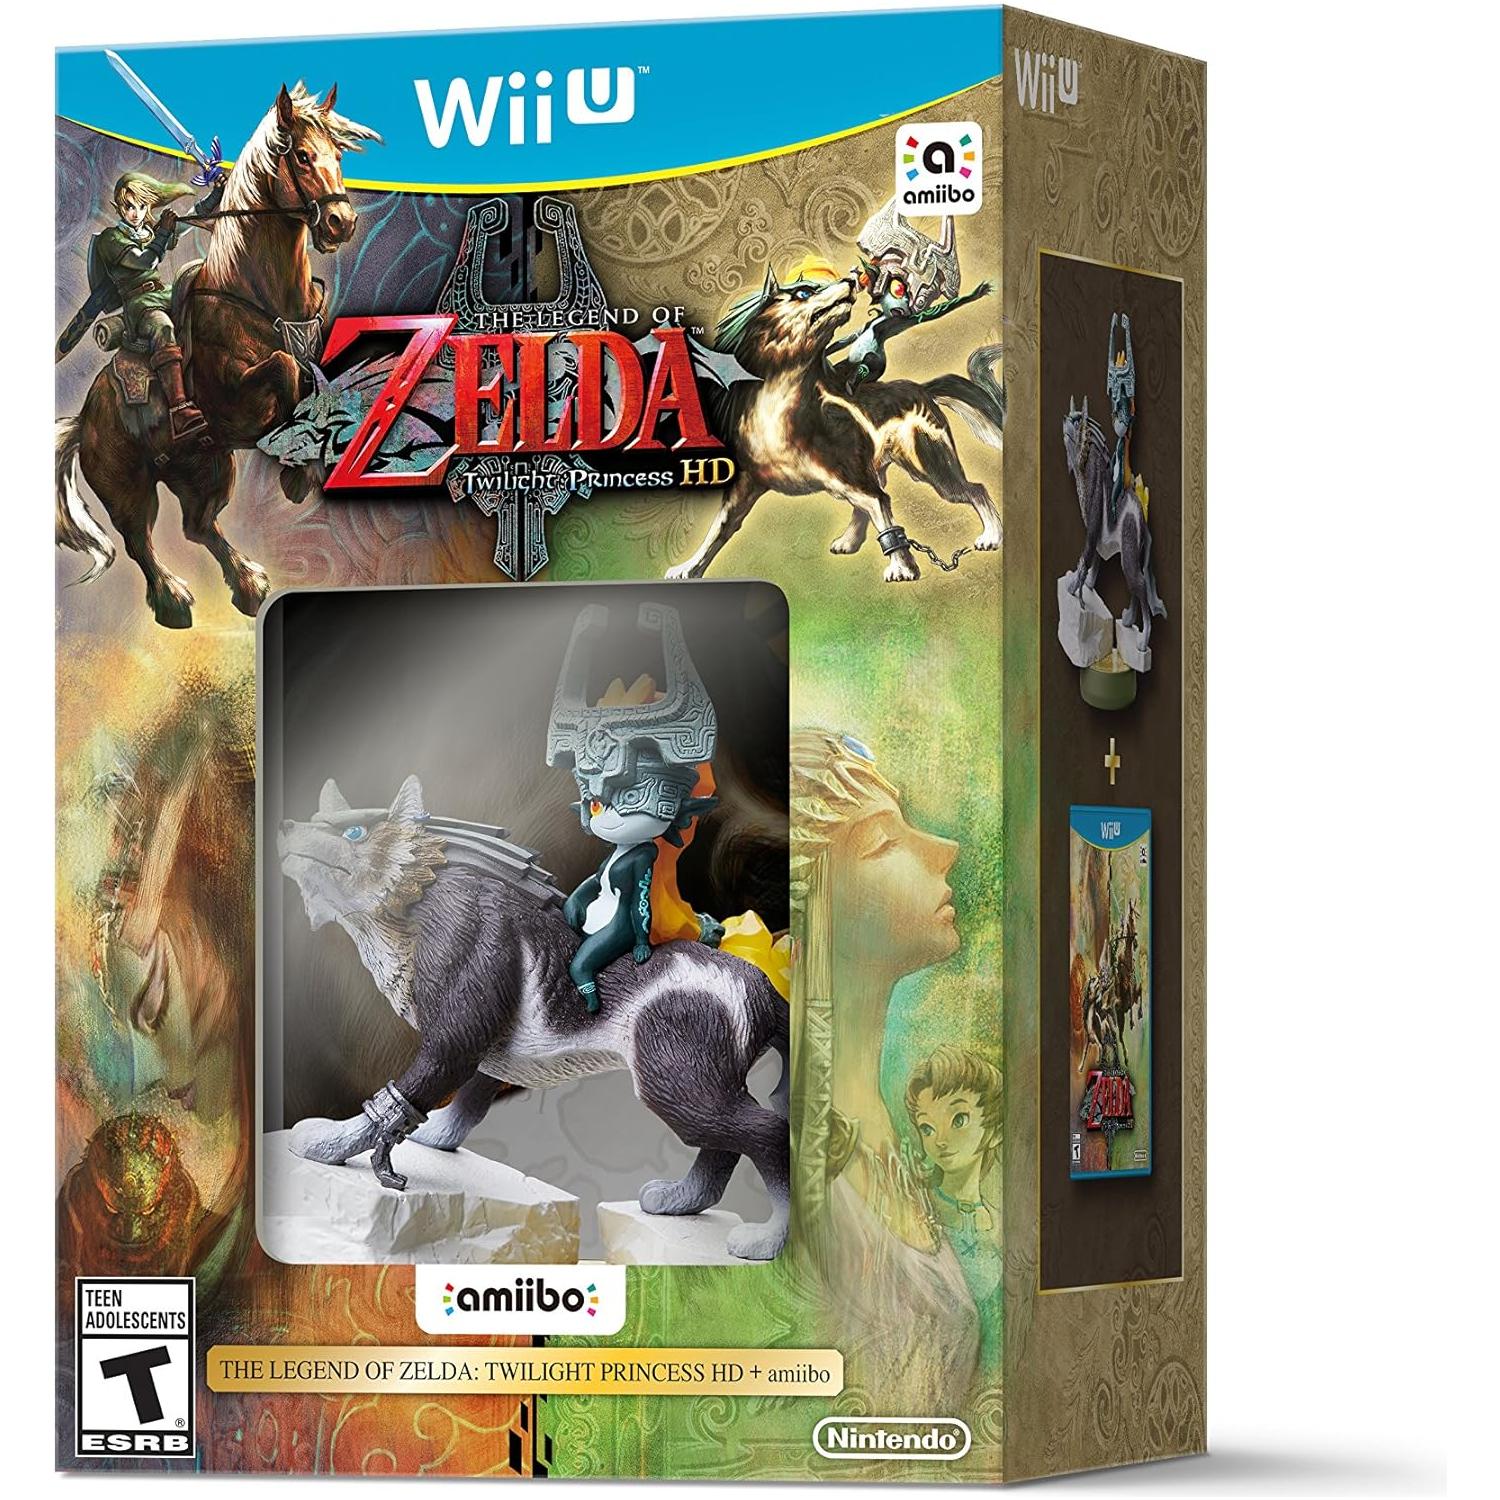 WII U - The Legend of Zelda Twilight Princess HD + Wolf Link Amiibo (Sealed)